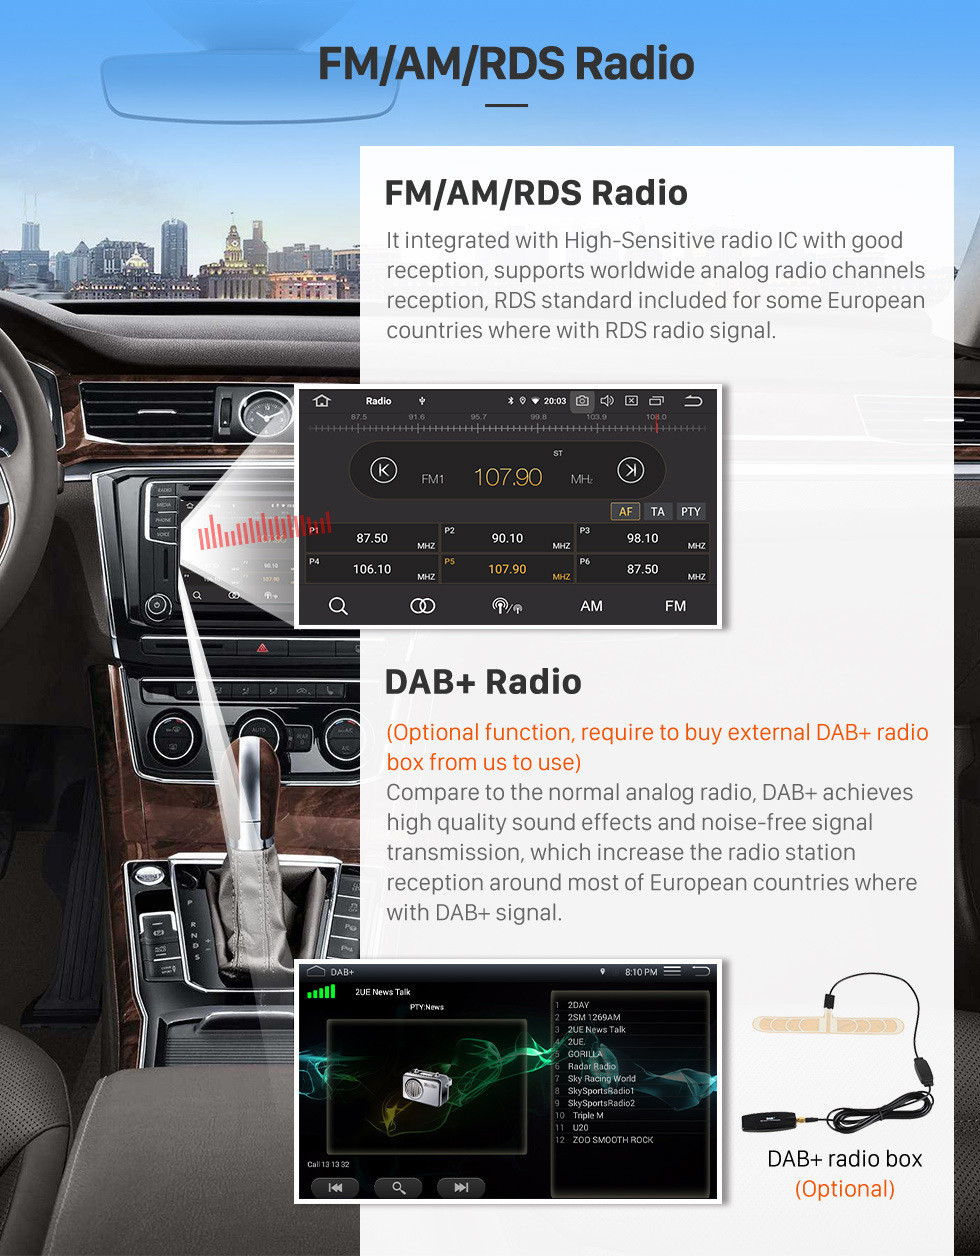 Seicane 2017 Ford JMC Tourneo Connect Low Version 9 дюймов Android 11.0 Радио HD Сенсорный экран GPS Navi Stereo с USB FM RDS WIFI Поддержка Bluetooth SWC DVD Playe 4G